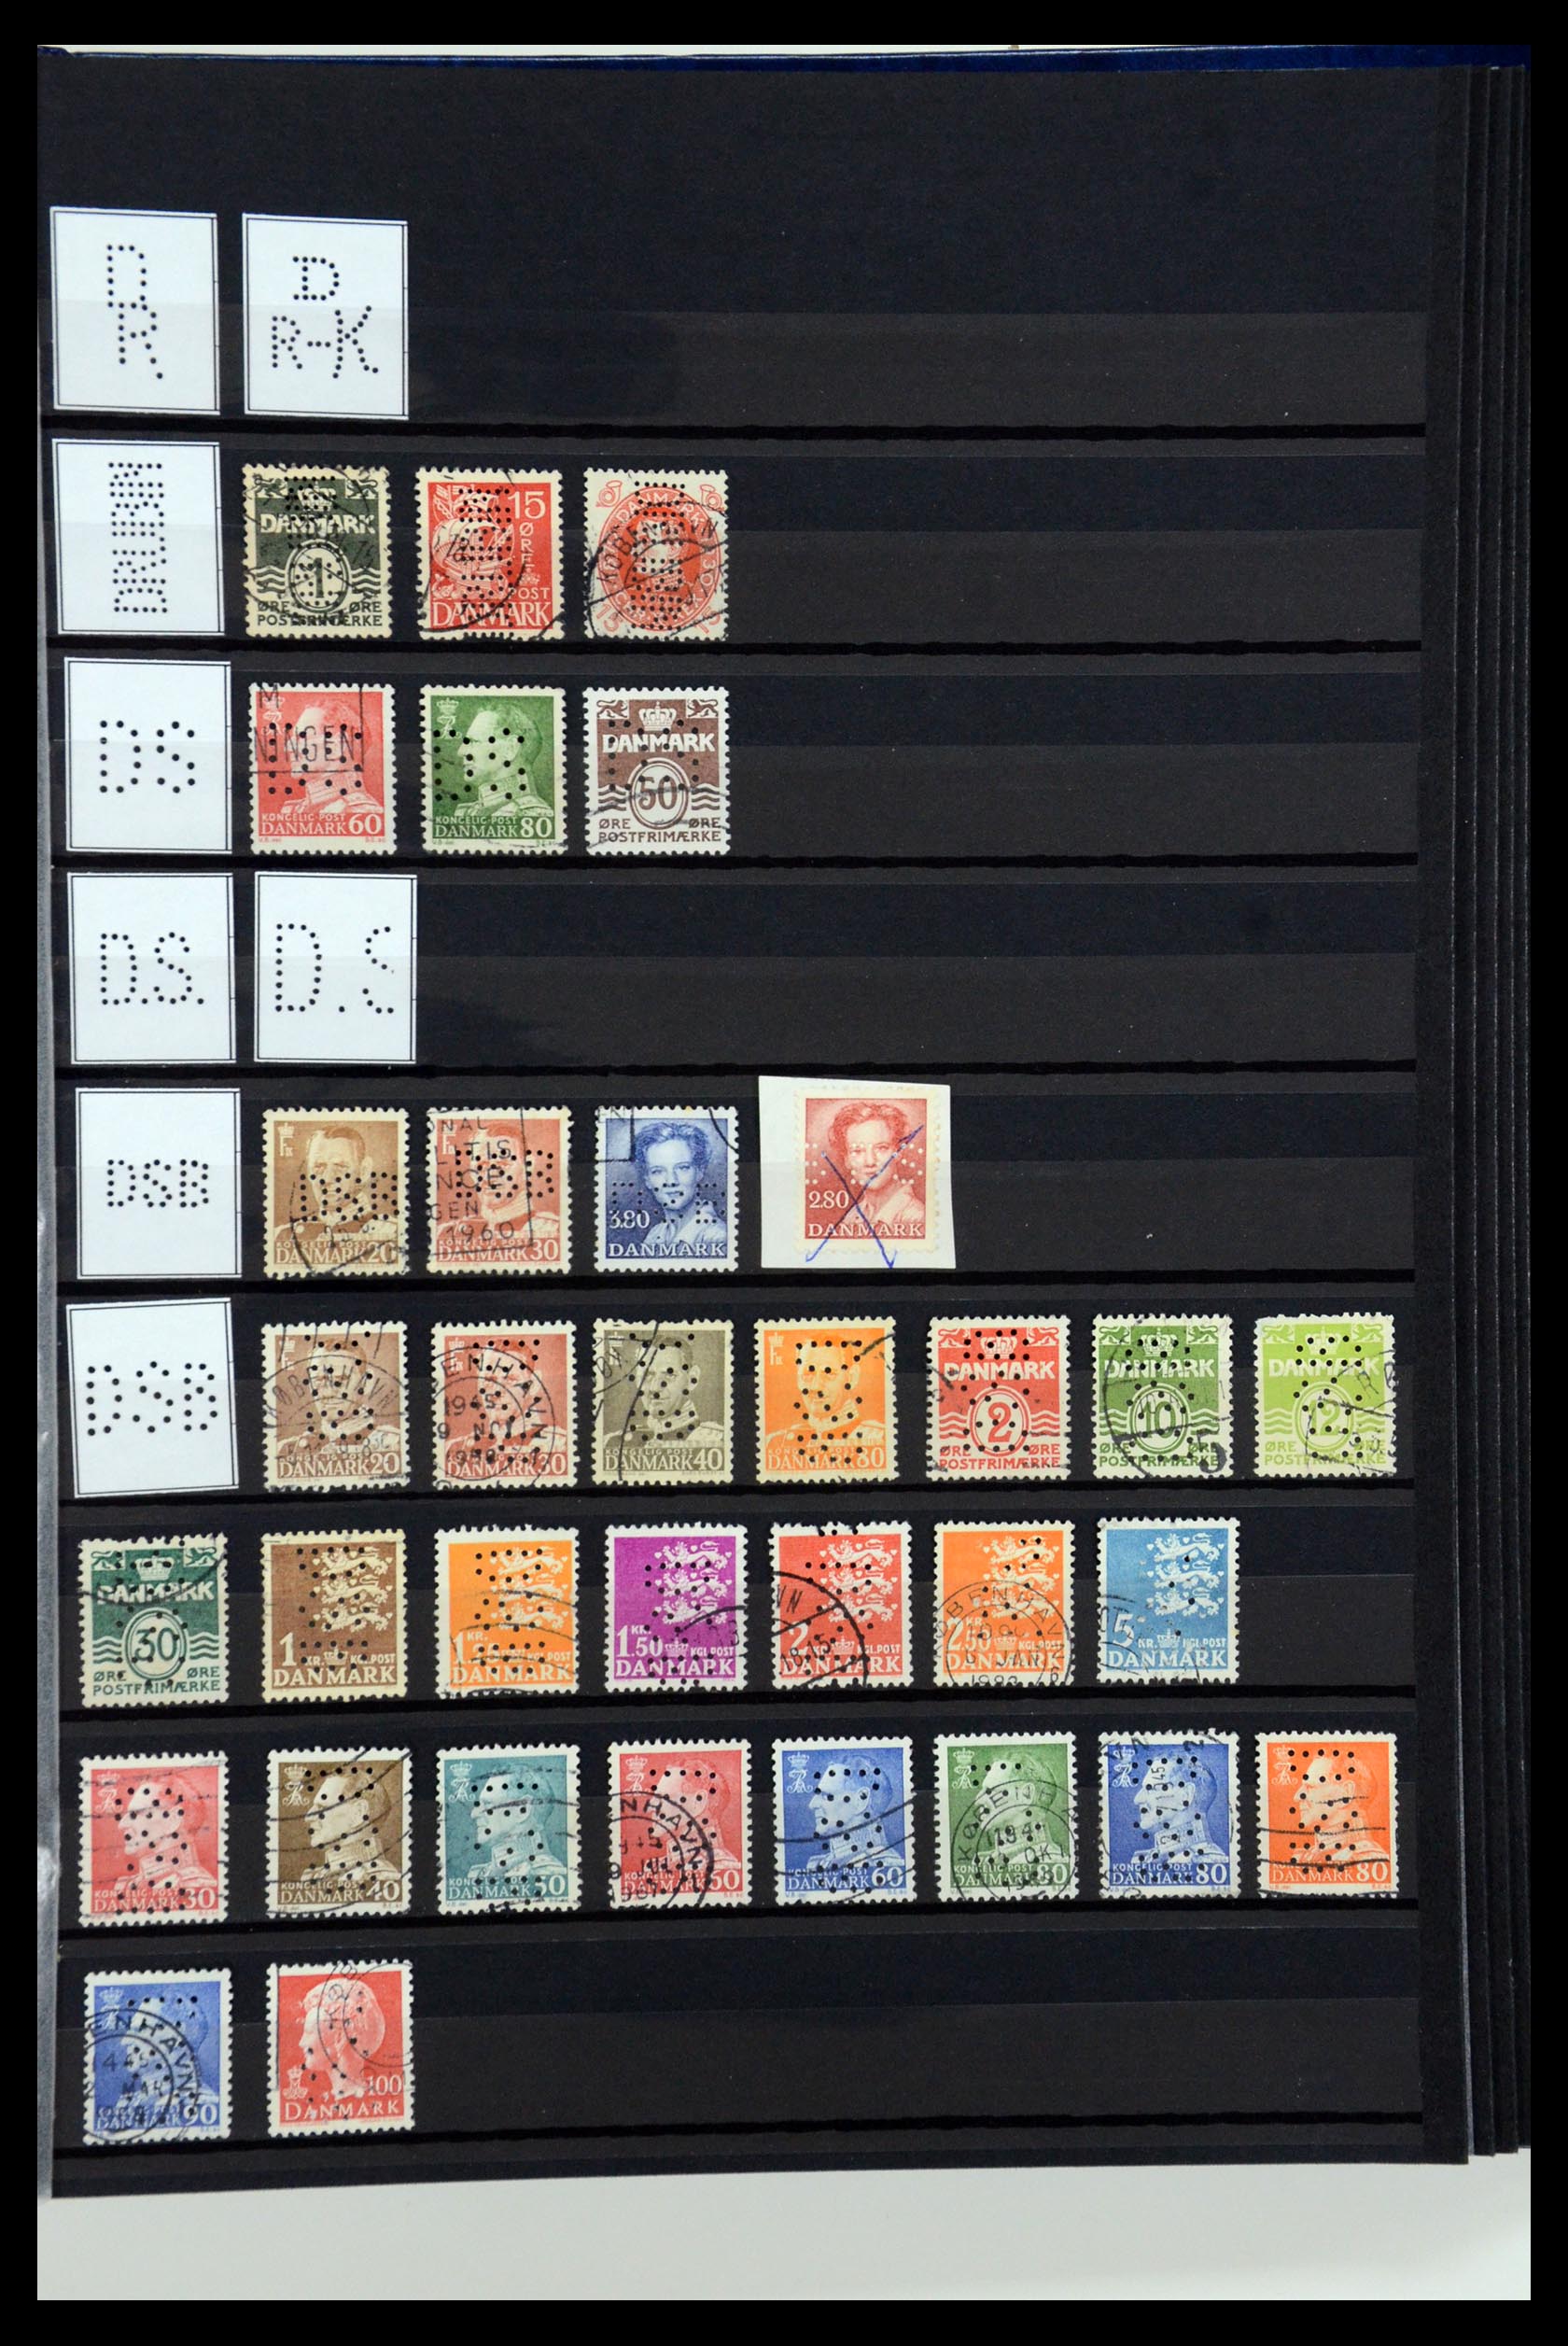 36396 040 - Stamp collection 36396 Denmark perfins.